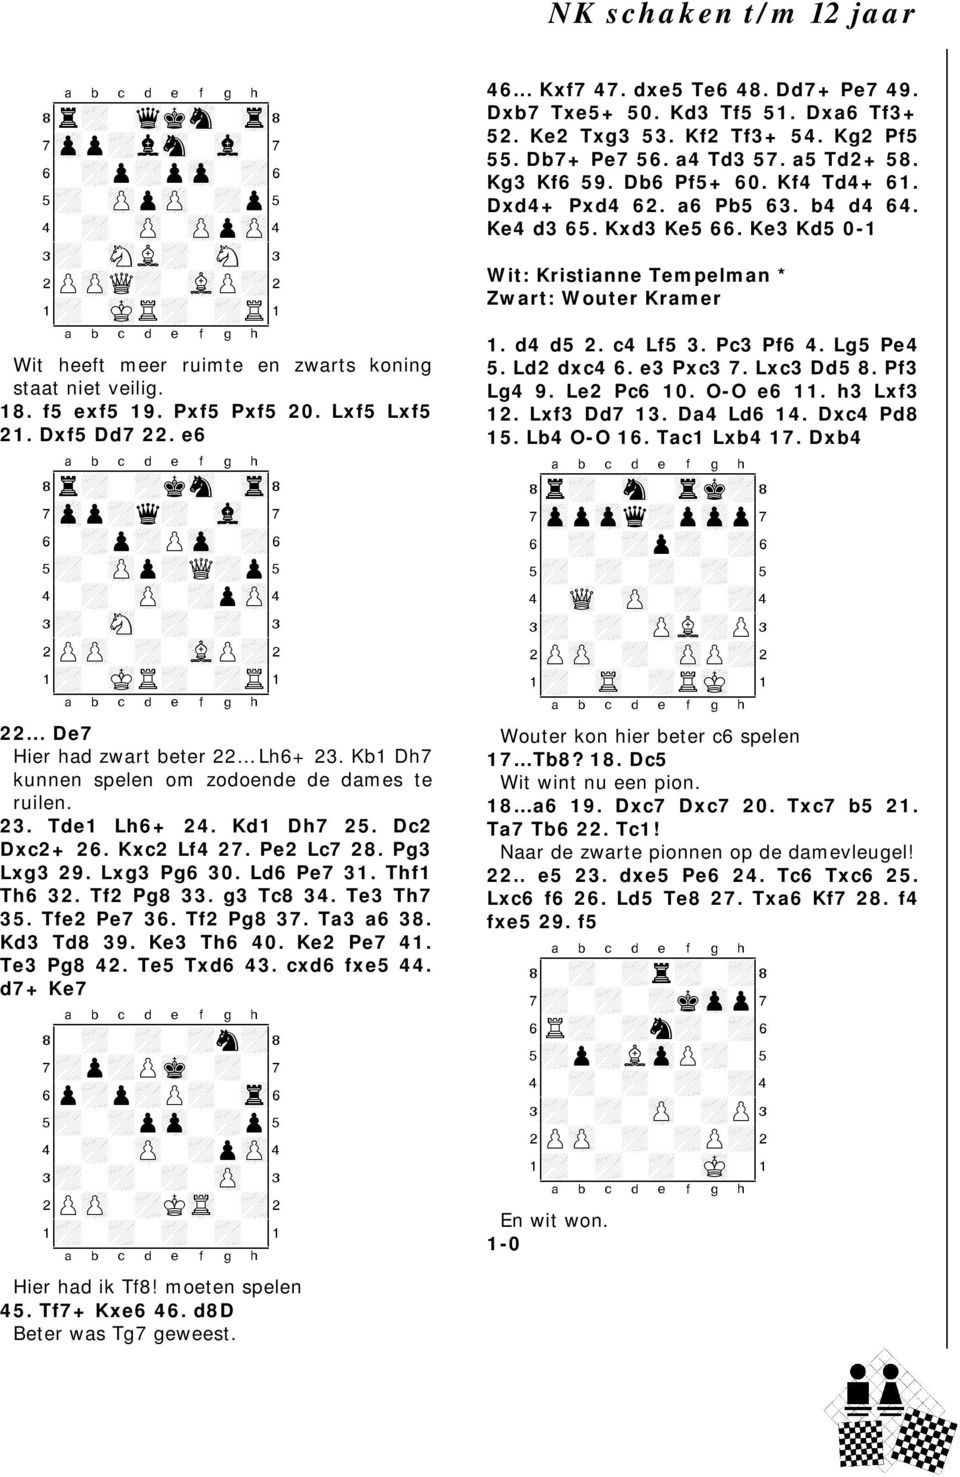 Kb1 Dh7 kunnen spelen om zodoende de dames te ruilen. 23. Tde1 Lh6+ 24. Kd1 Dh7 25. Dc2 Dxc2+ 26. Kxc2 Lf4 27. Pe2 Lc7 28. Pg3 Lxg3 29. Lxg3 Pg6 30. Ld6 Pe7 31. Thf1 Th6 32. Tf2 Pg8 33. g3 Tc8 34.